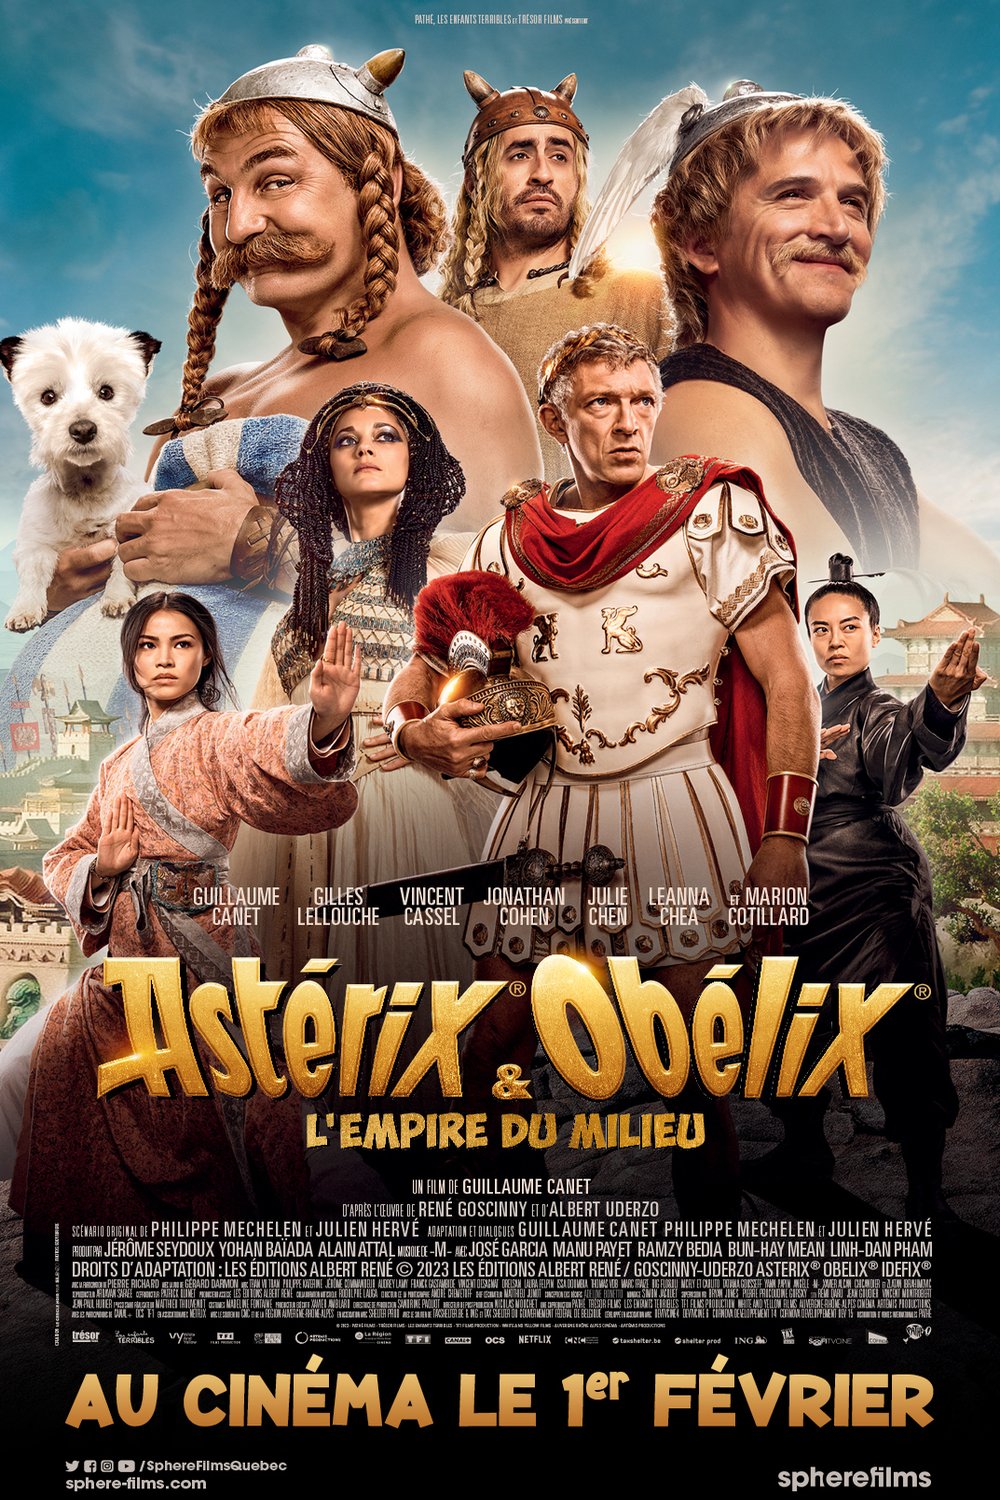 Poster of the movie Astérix & Obélix: L'empire du milieu